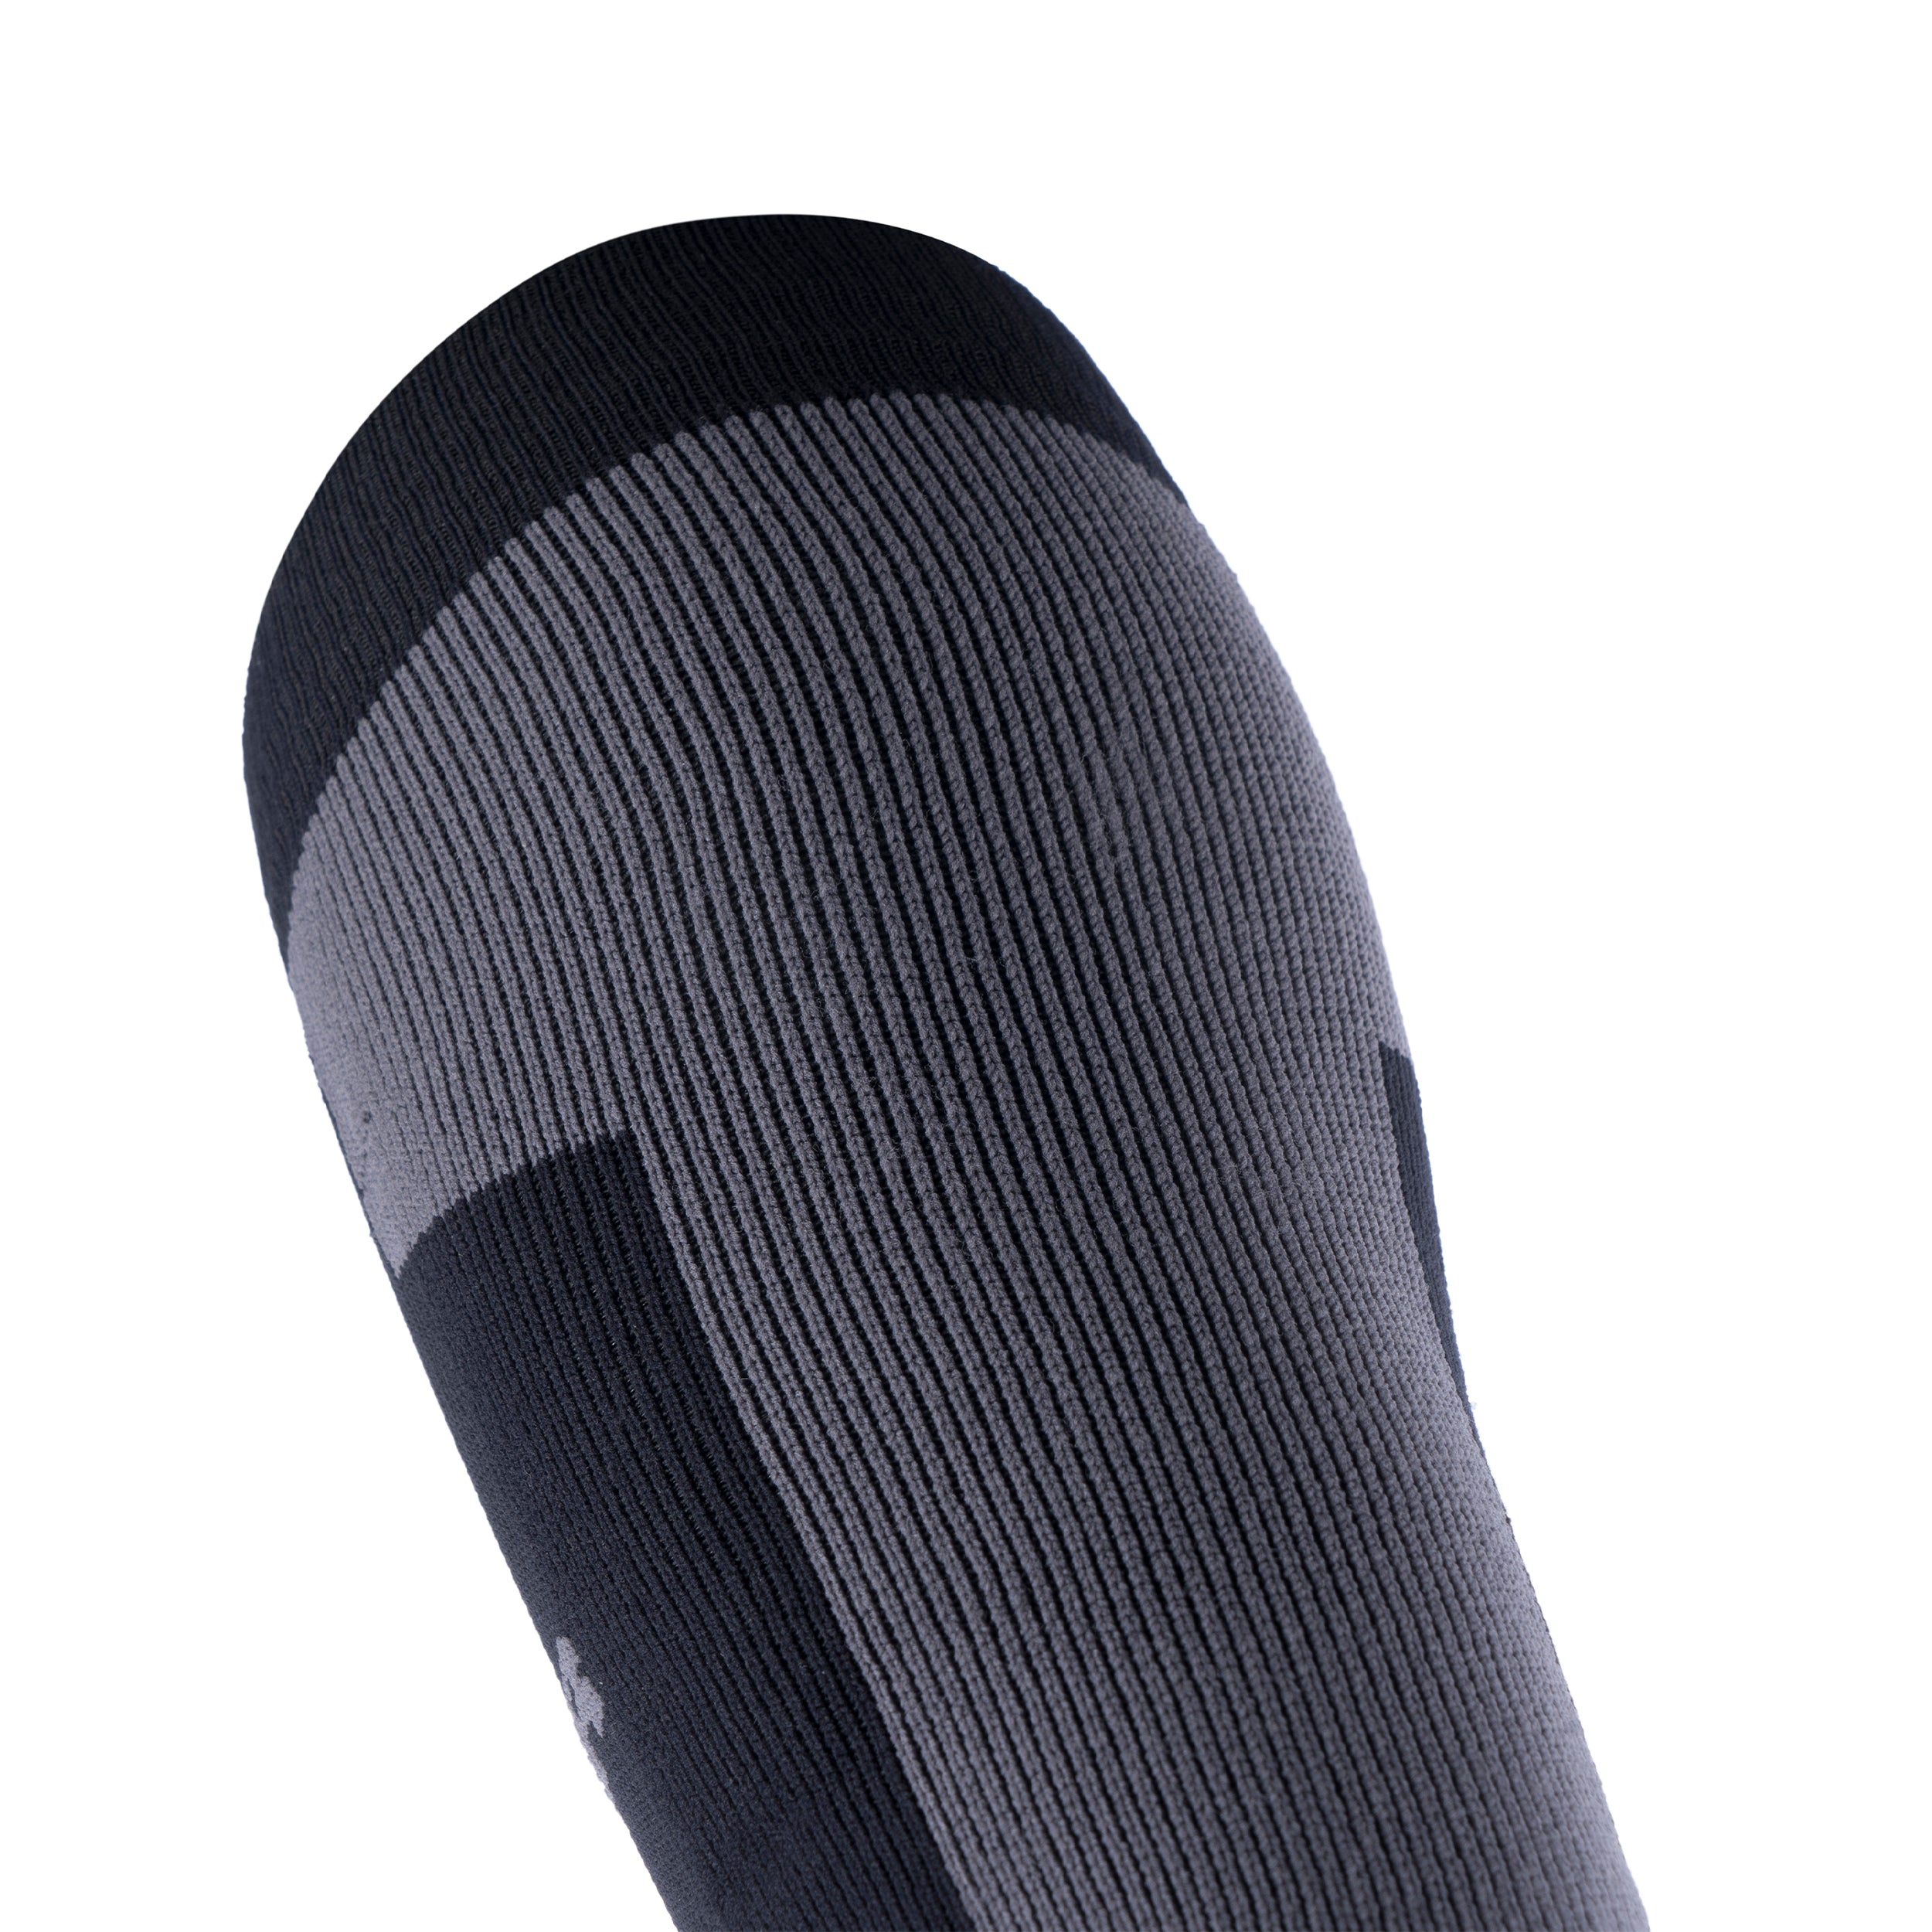 Review: Compressport F-Like Full Leg compression tight